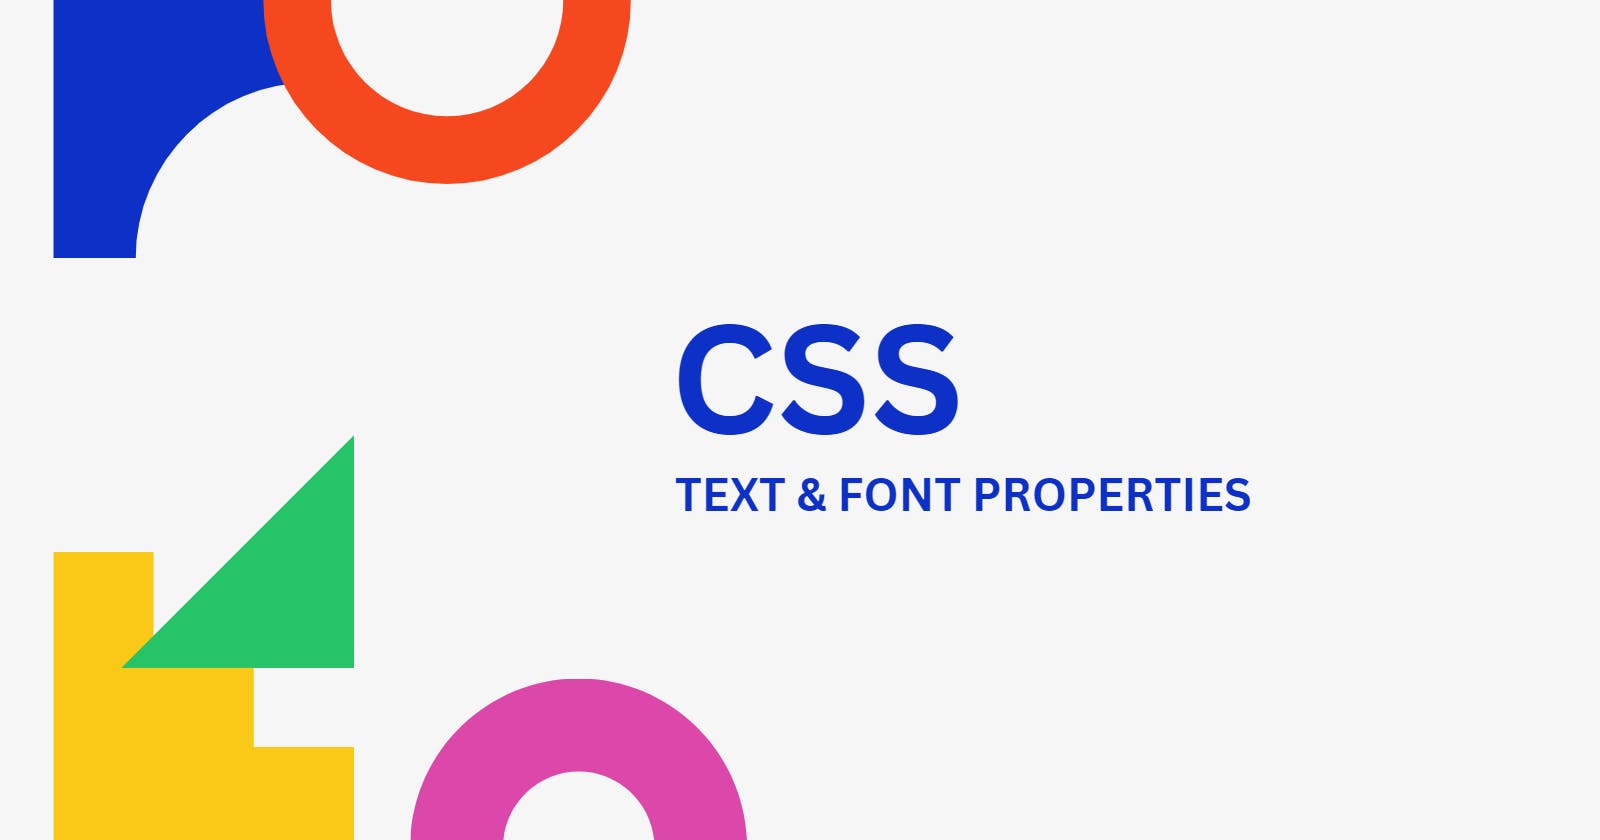 Text & Font Properties